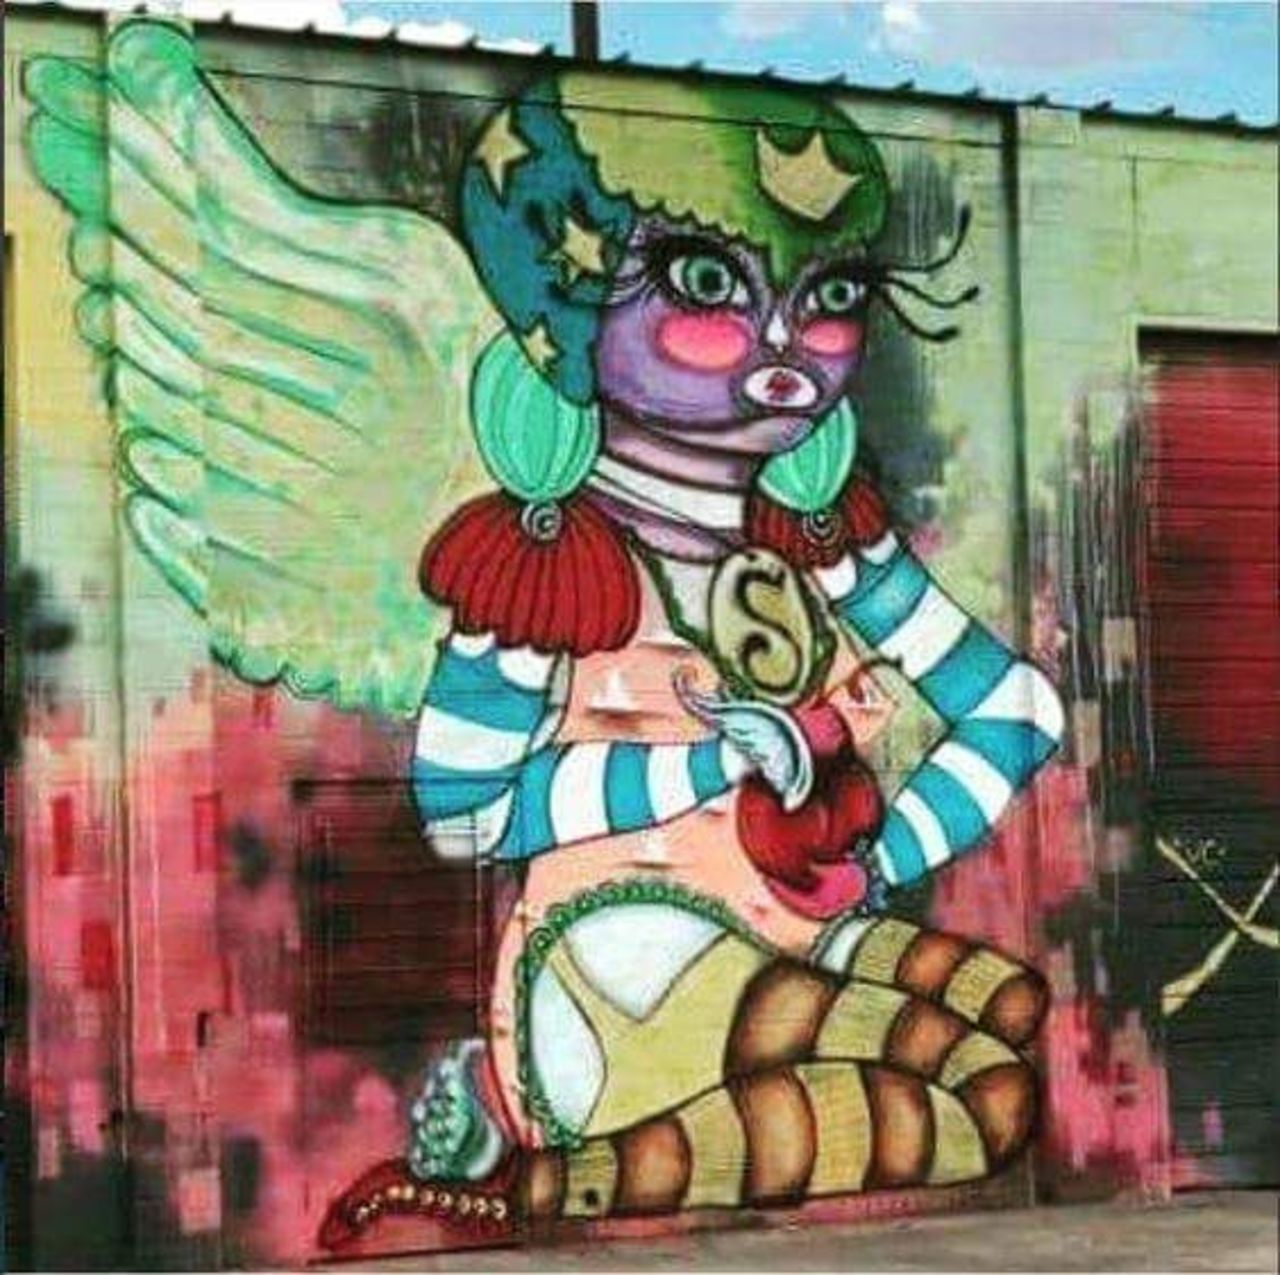 Artist: Ozjuah Location: Brazil #streetart #mural #graffiti #art https://t.co/xrrrI6FKh8